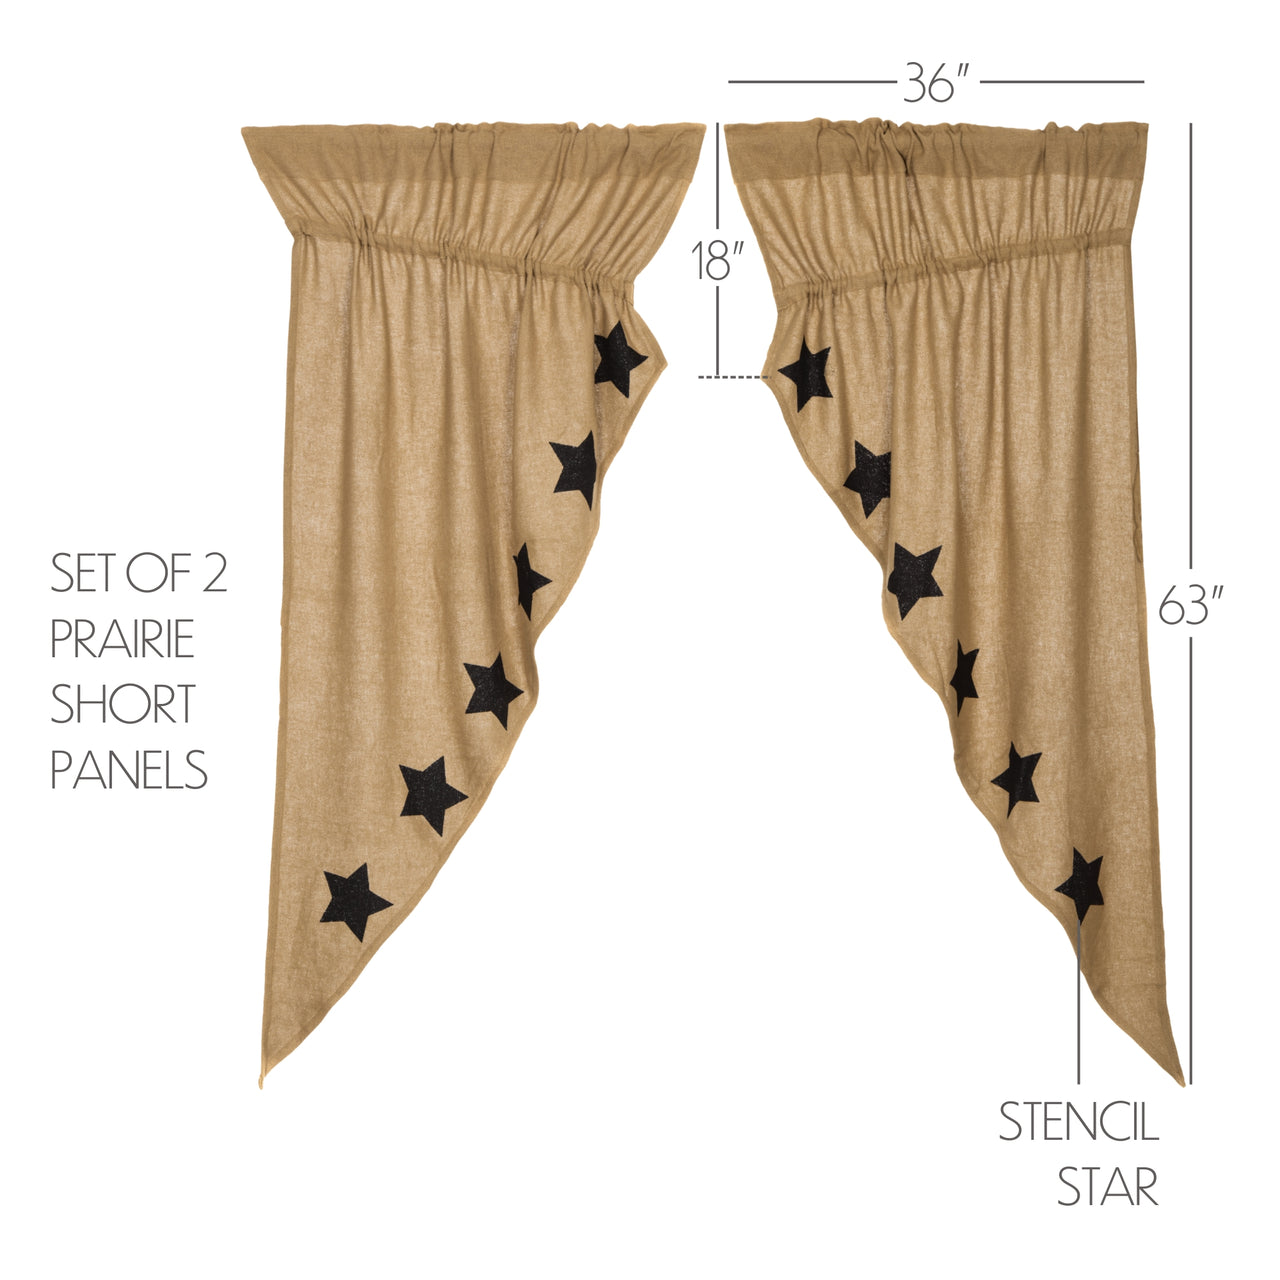 Burlap w/Black Stencil Stars Prairie Short Panel Curtain Set of 2 63x36x18